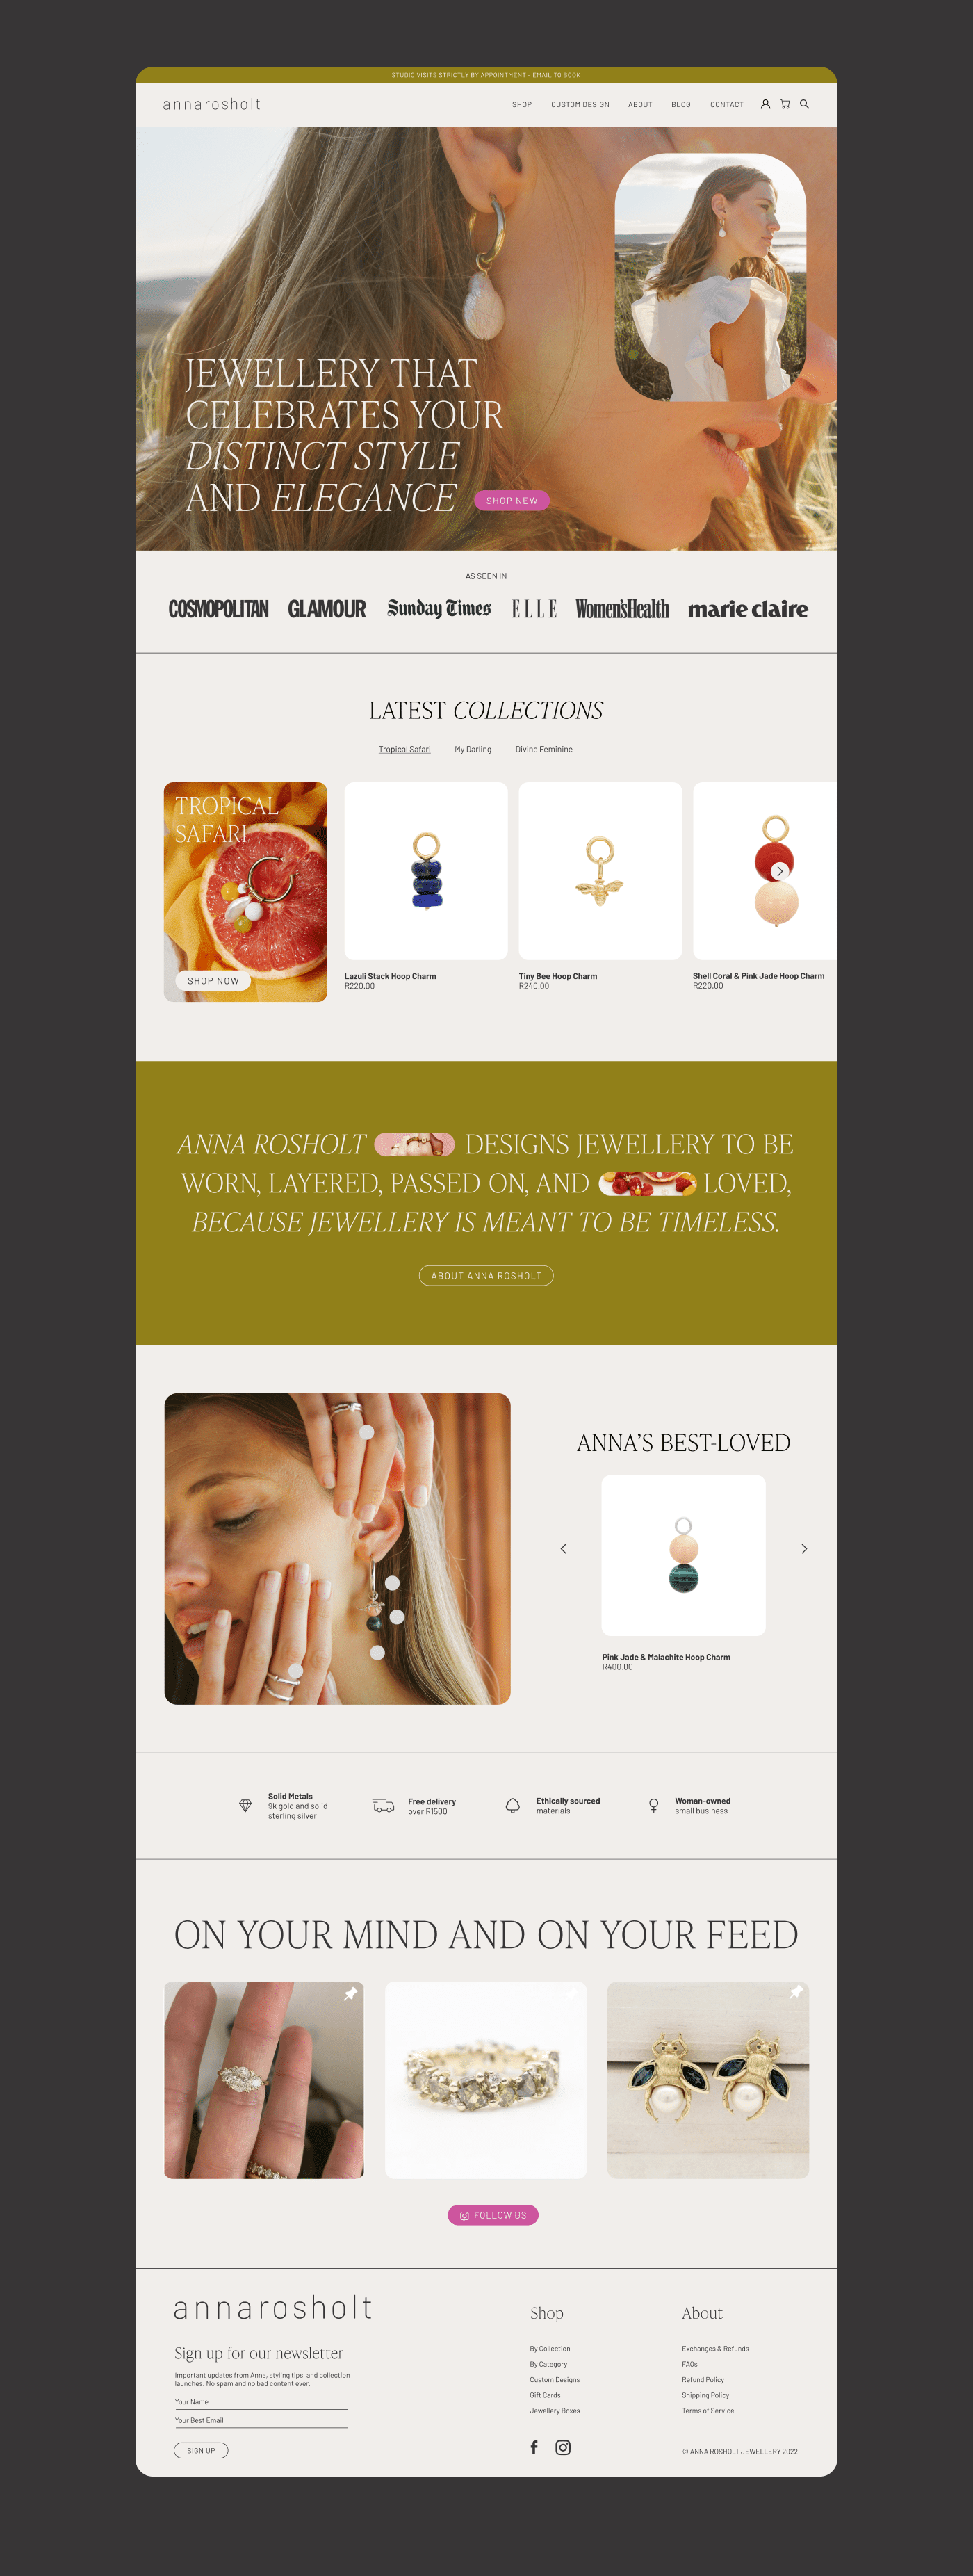 Jewellery jewelry brand identity Website logo south africa visual identity branding  e-commerce Social media post